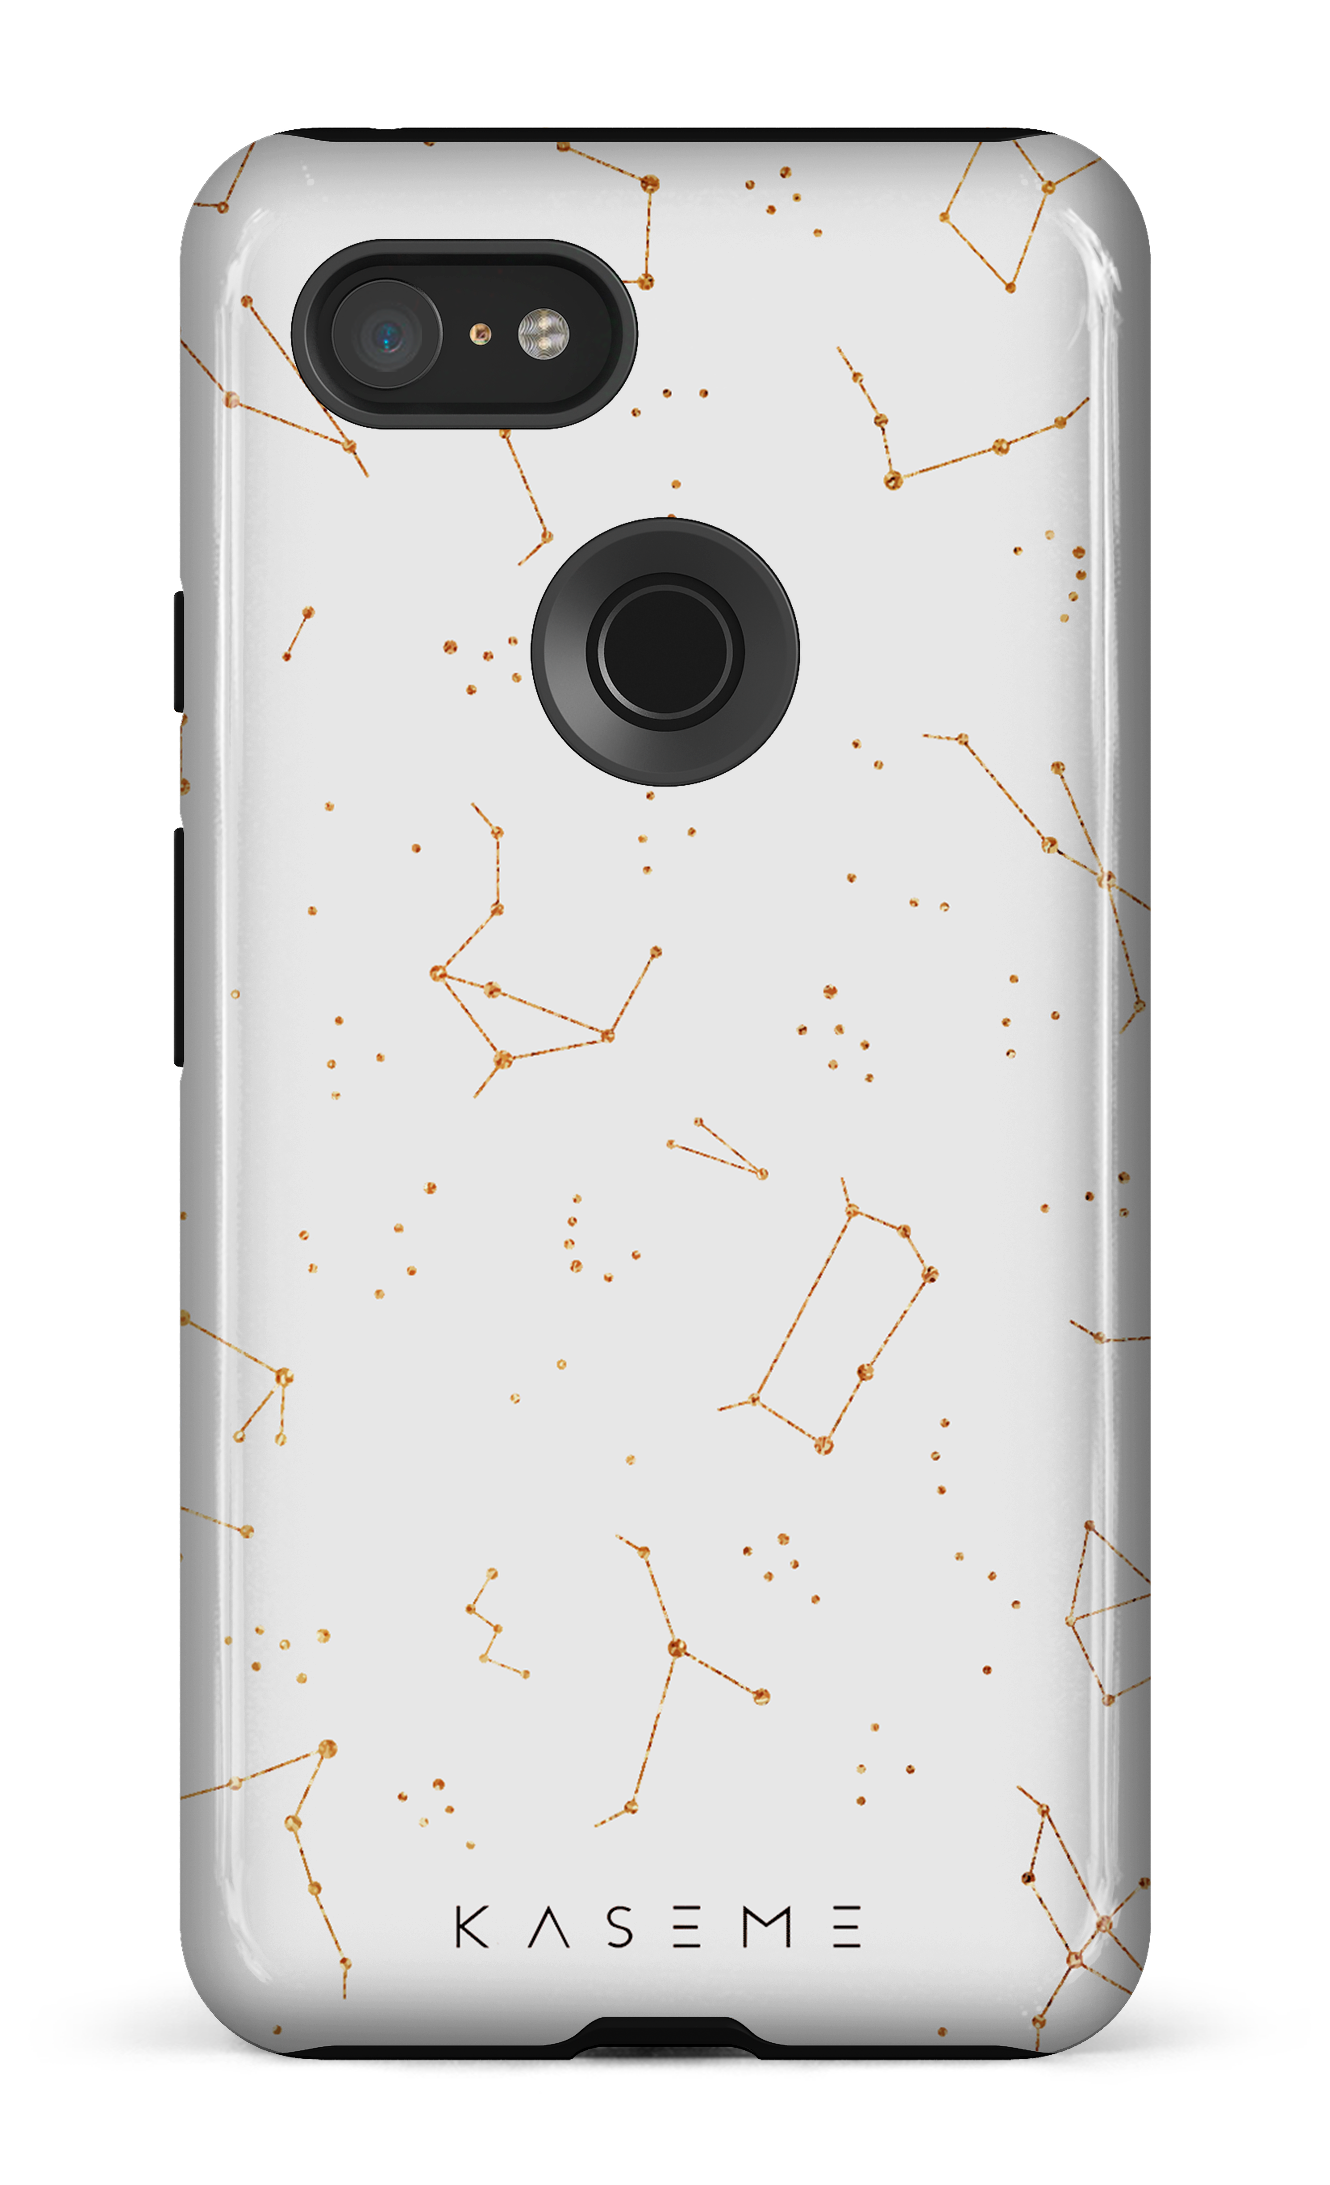 Stardust Sky by Cindy - Google Pixel 3 XL